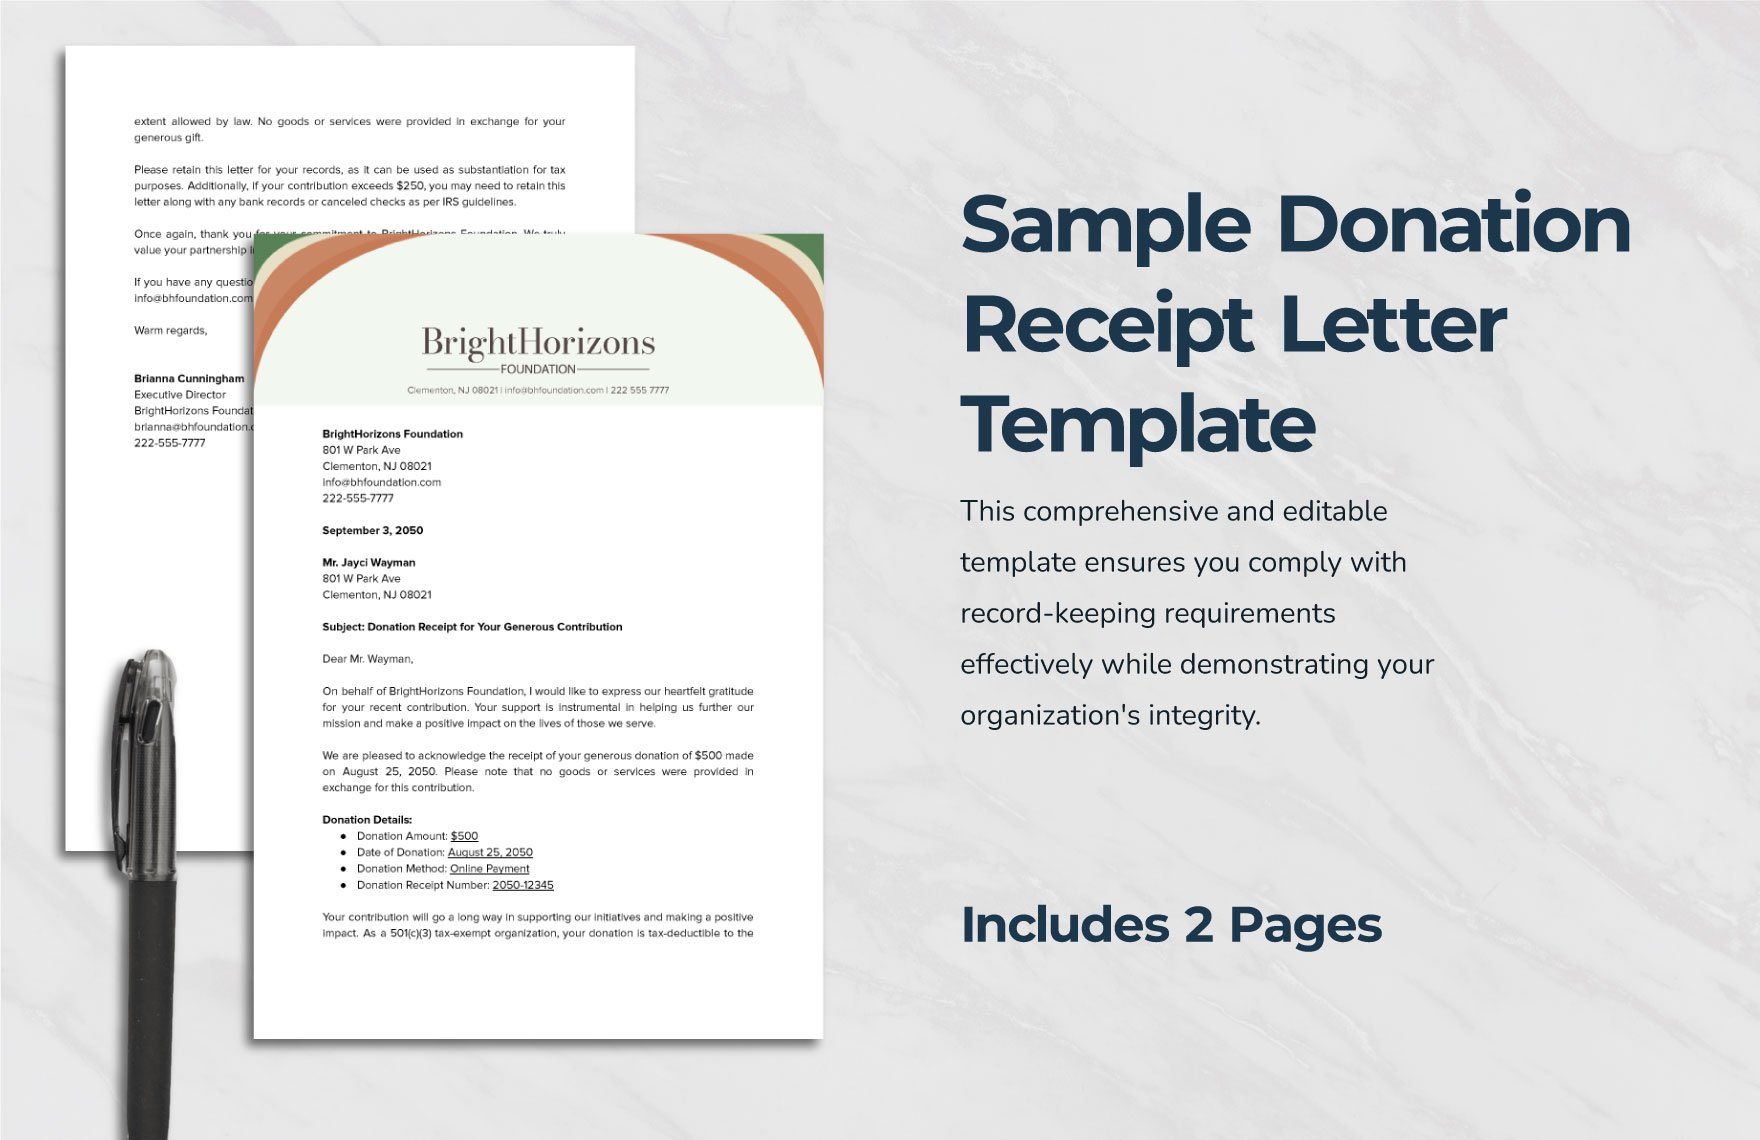 Sample Donation Receipt Letter Template